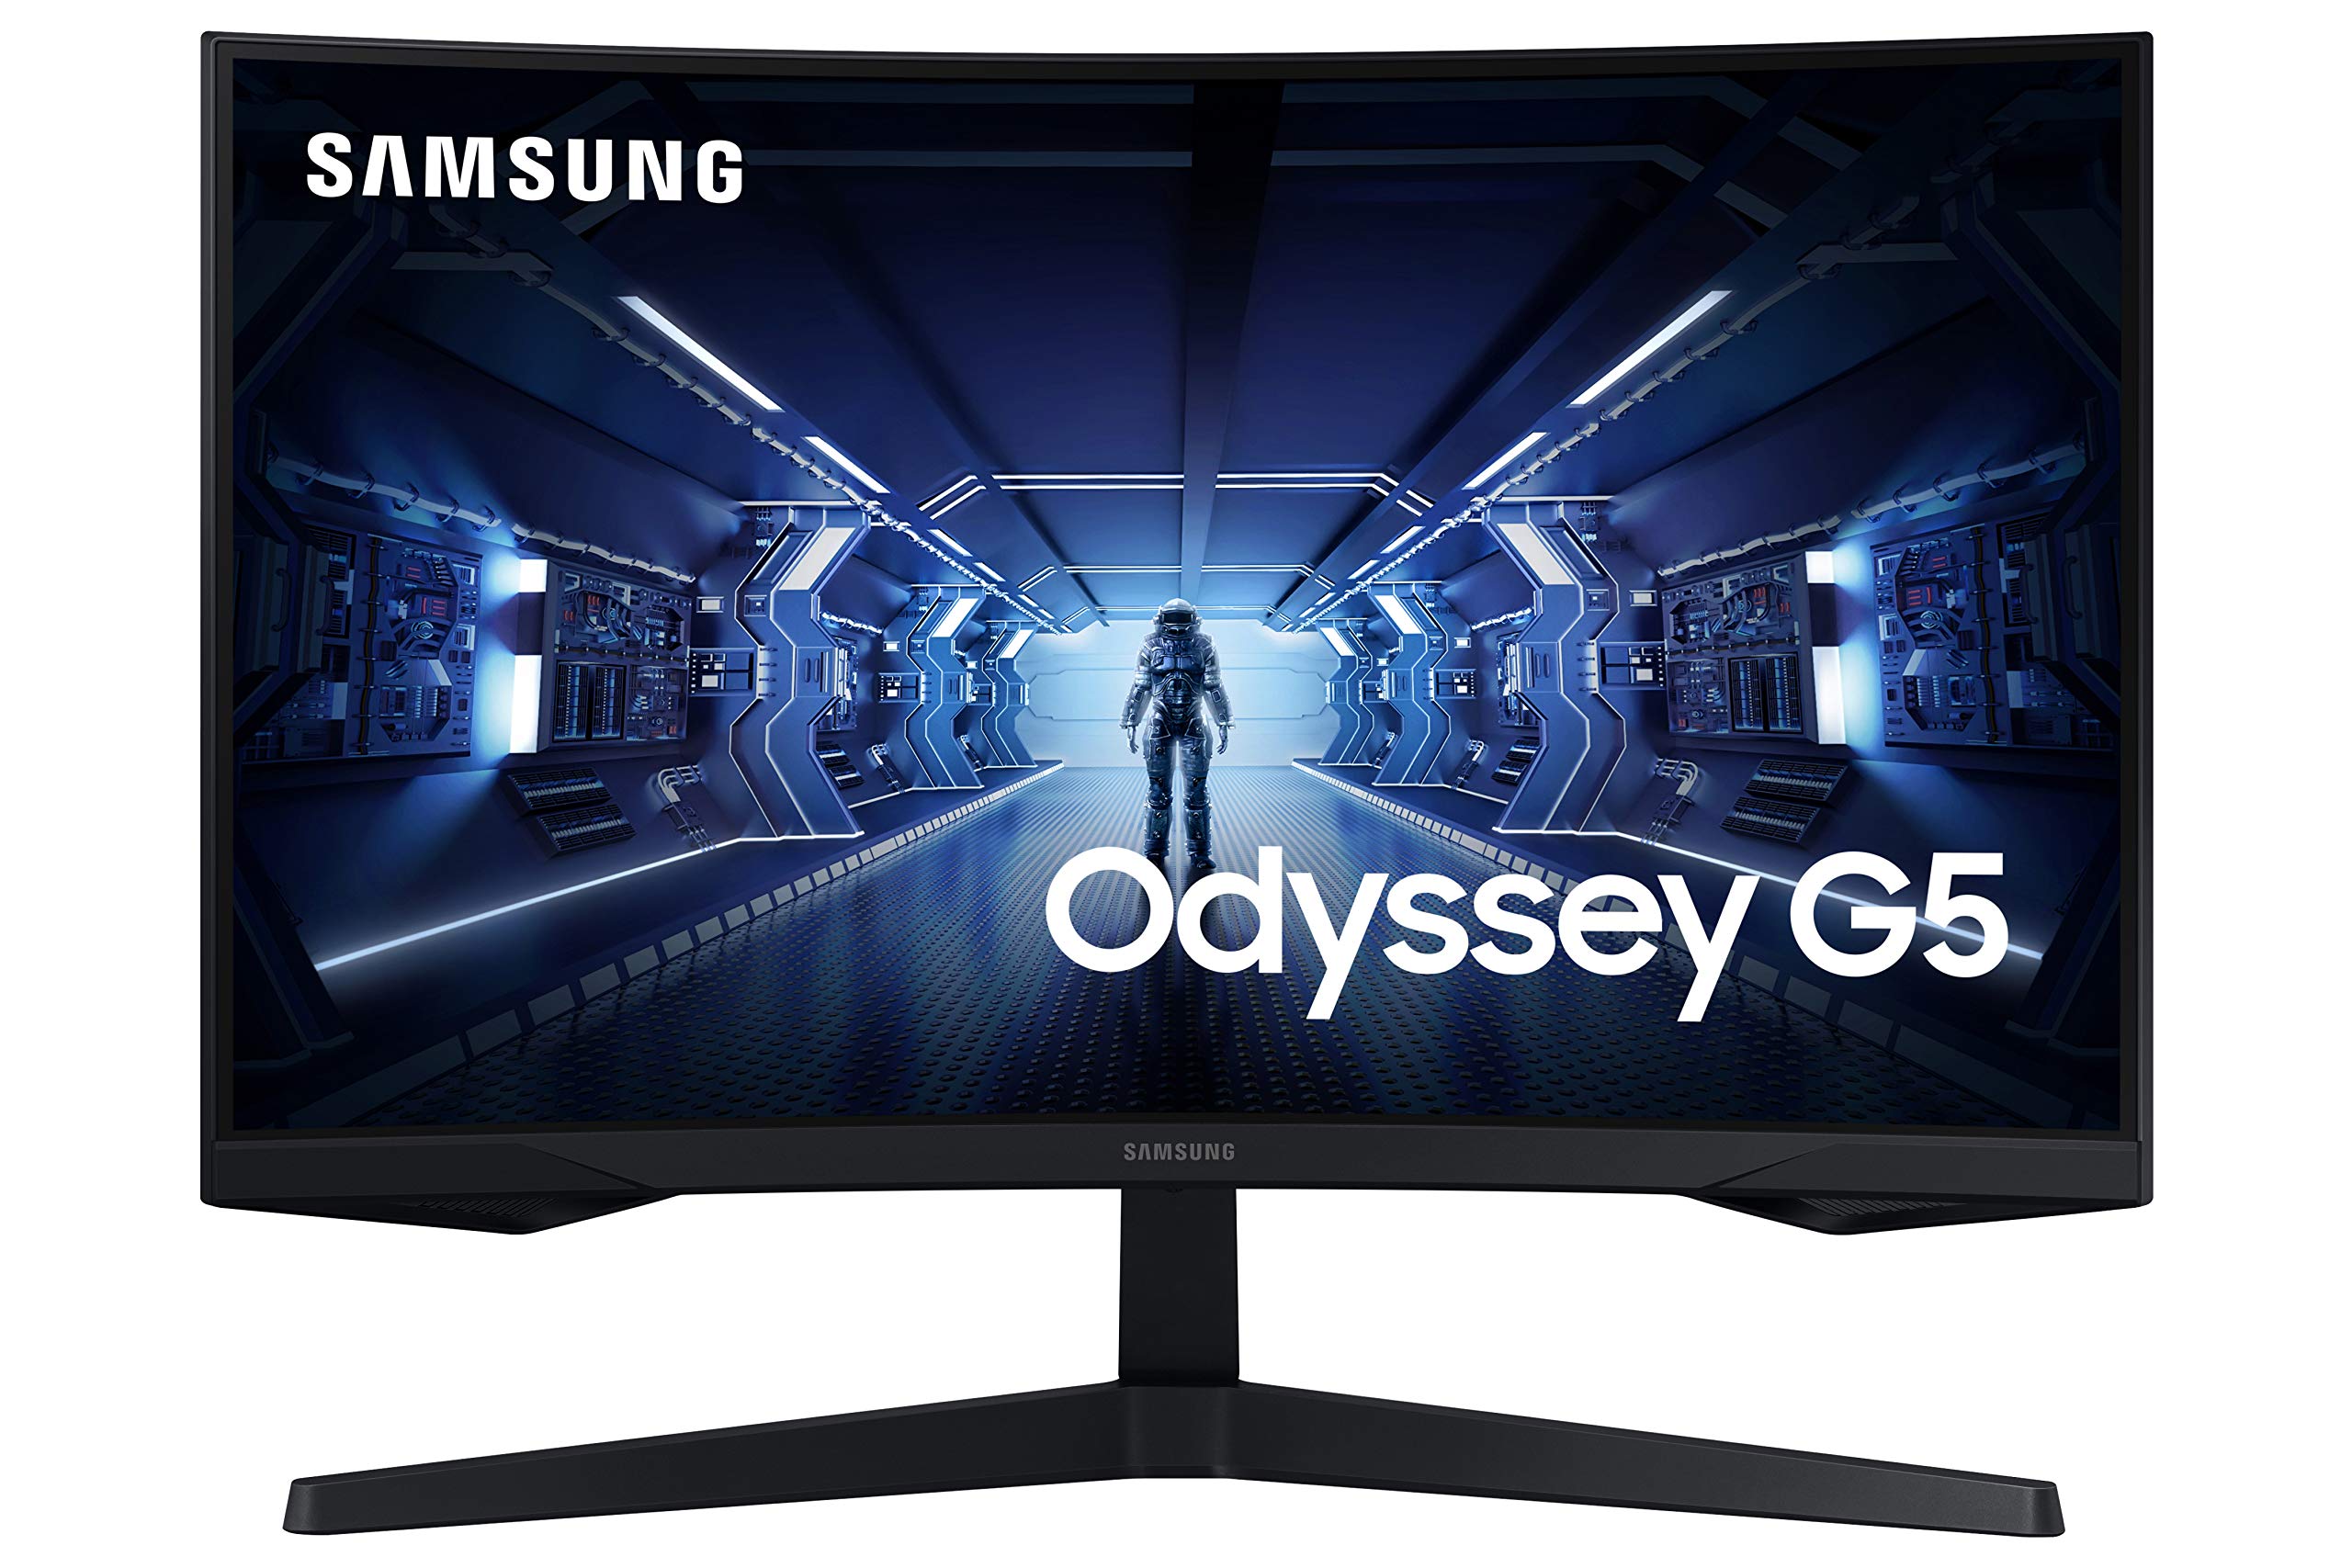 SAMSUNG Odyssey G5 Series 27-Inch WQHD 2560x1440 Gaming Monitor 144Hz Curved 1ms HDMI Display Port FreeSync Premium